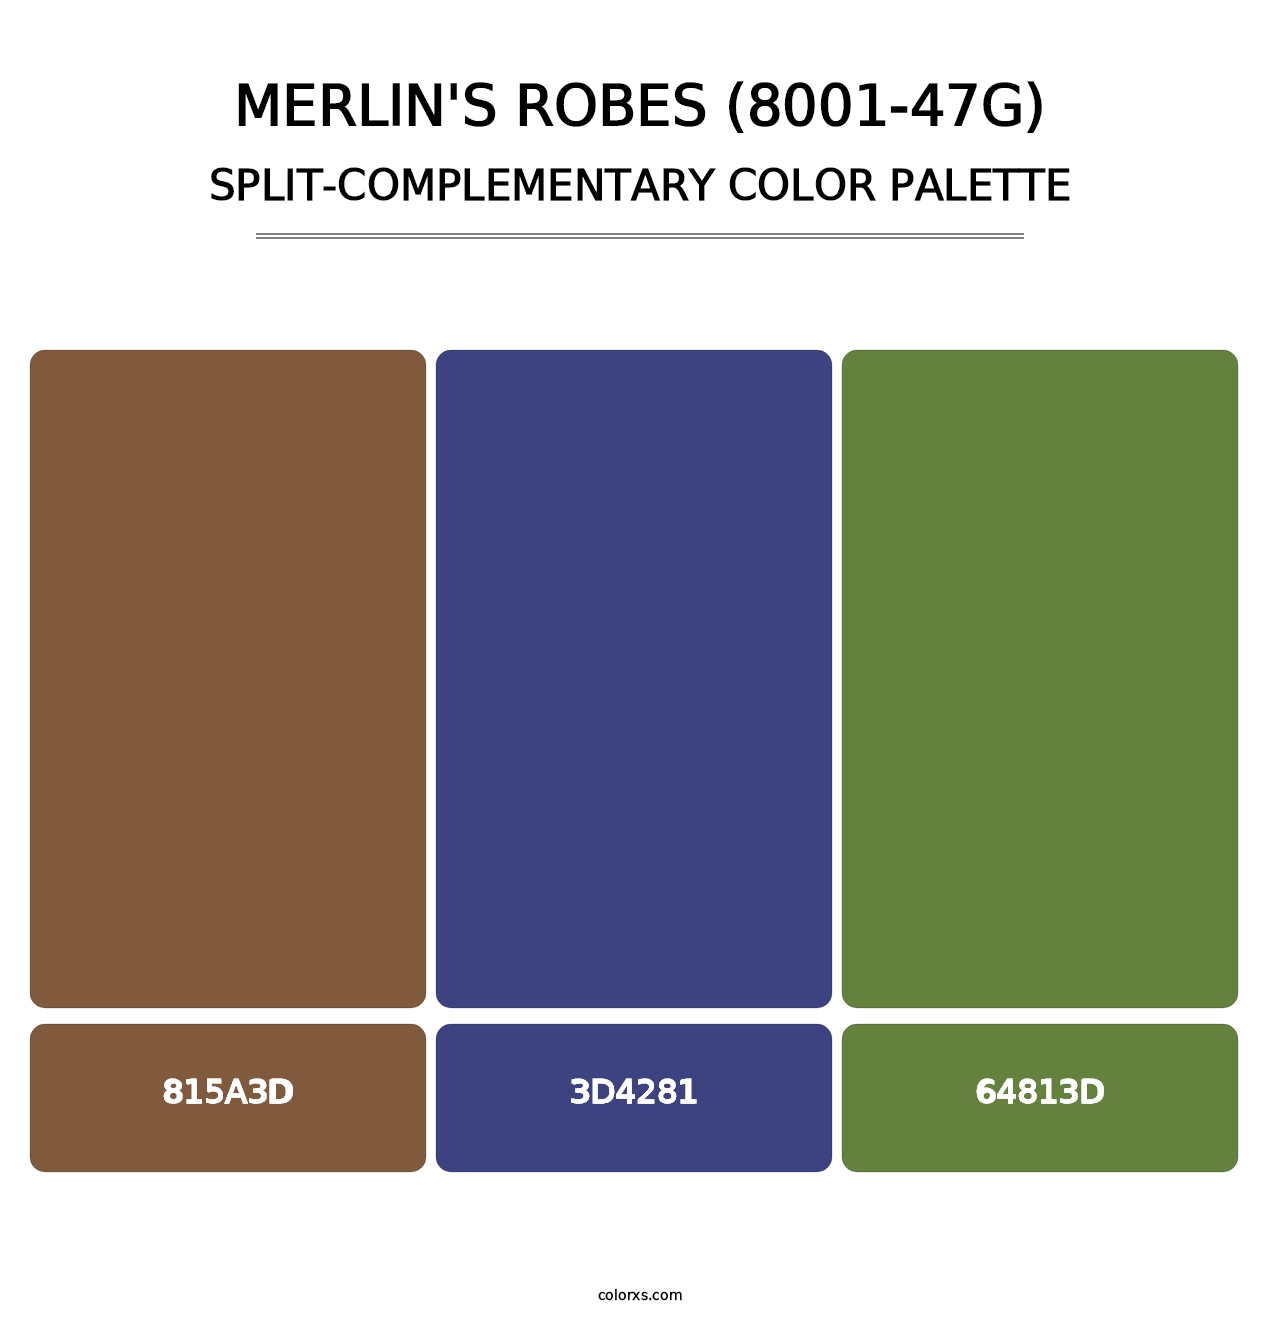 Merlin's Robes (8001-47G) - Split-Complementary Color Palette